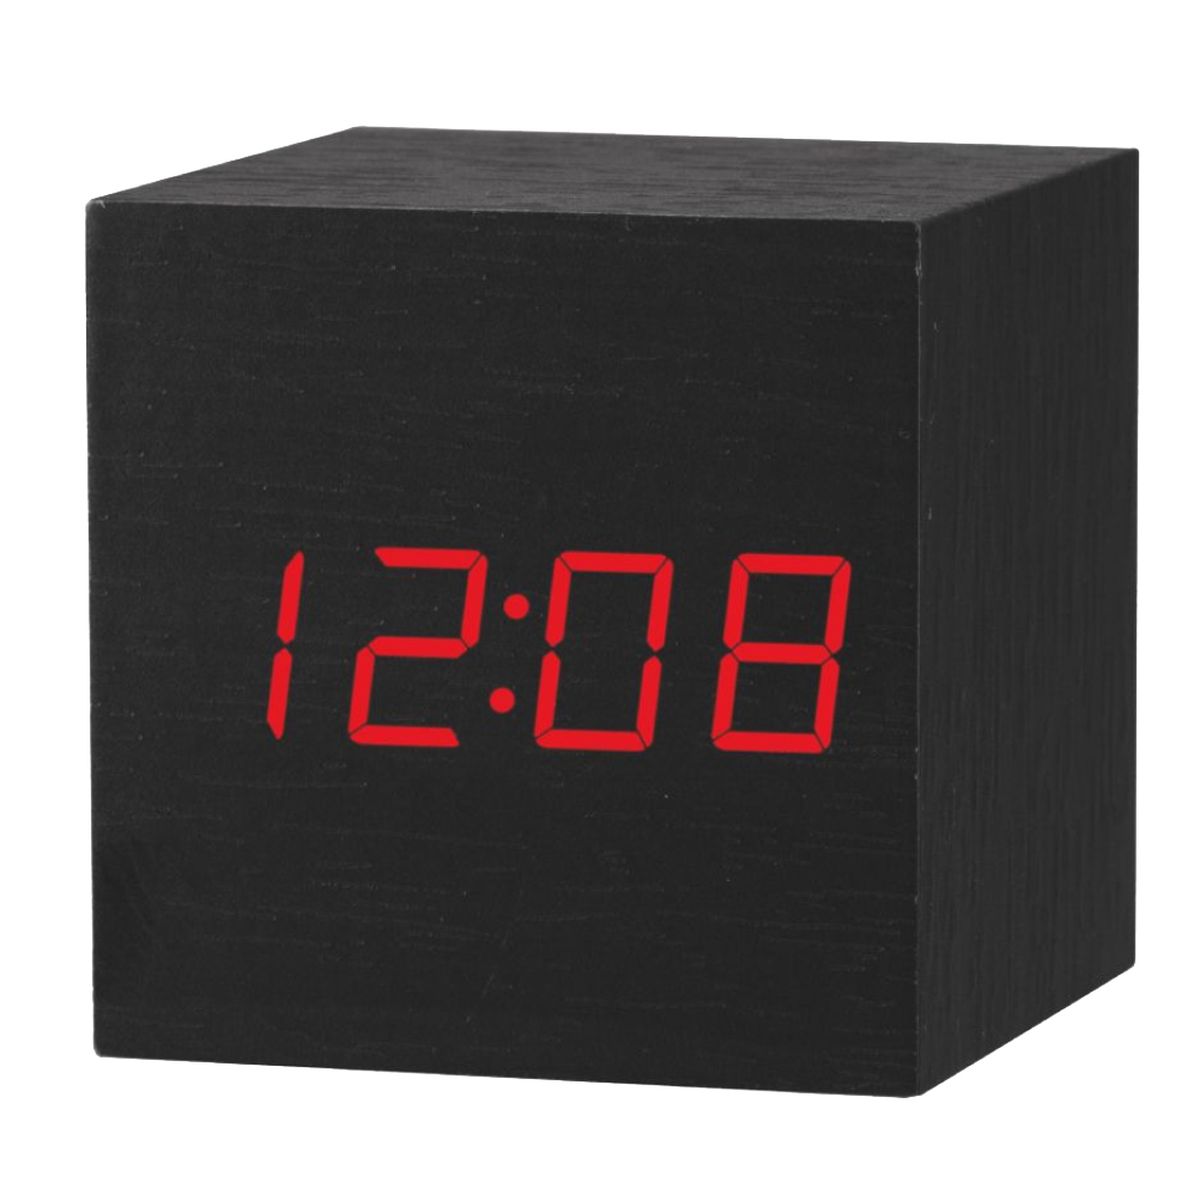 Alarm clock with acoustic sensor